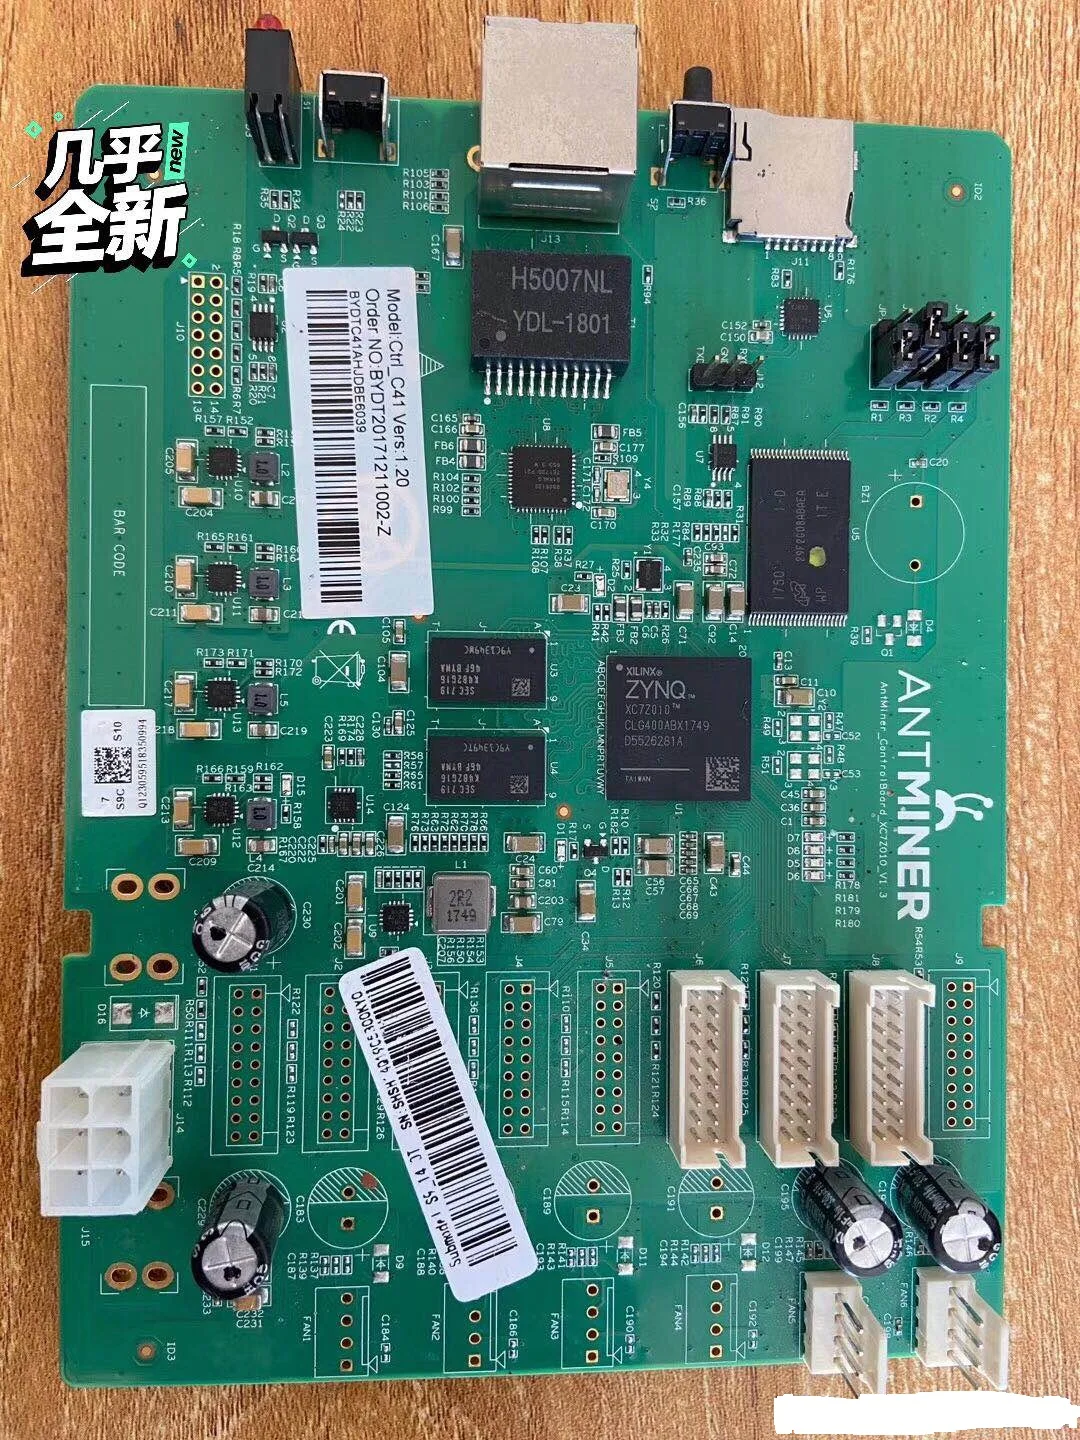 

Xilinx ZYNQ7010 Development Board, Xc7z010 FPGA, Fully Functional.